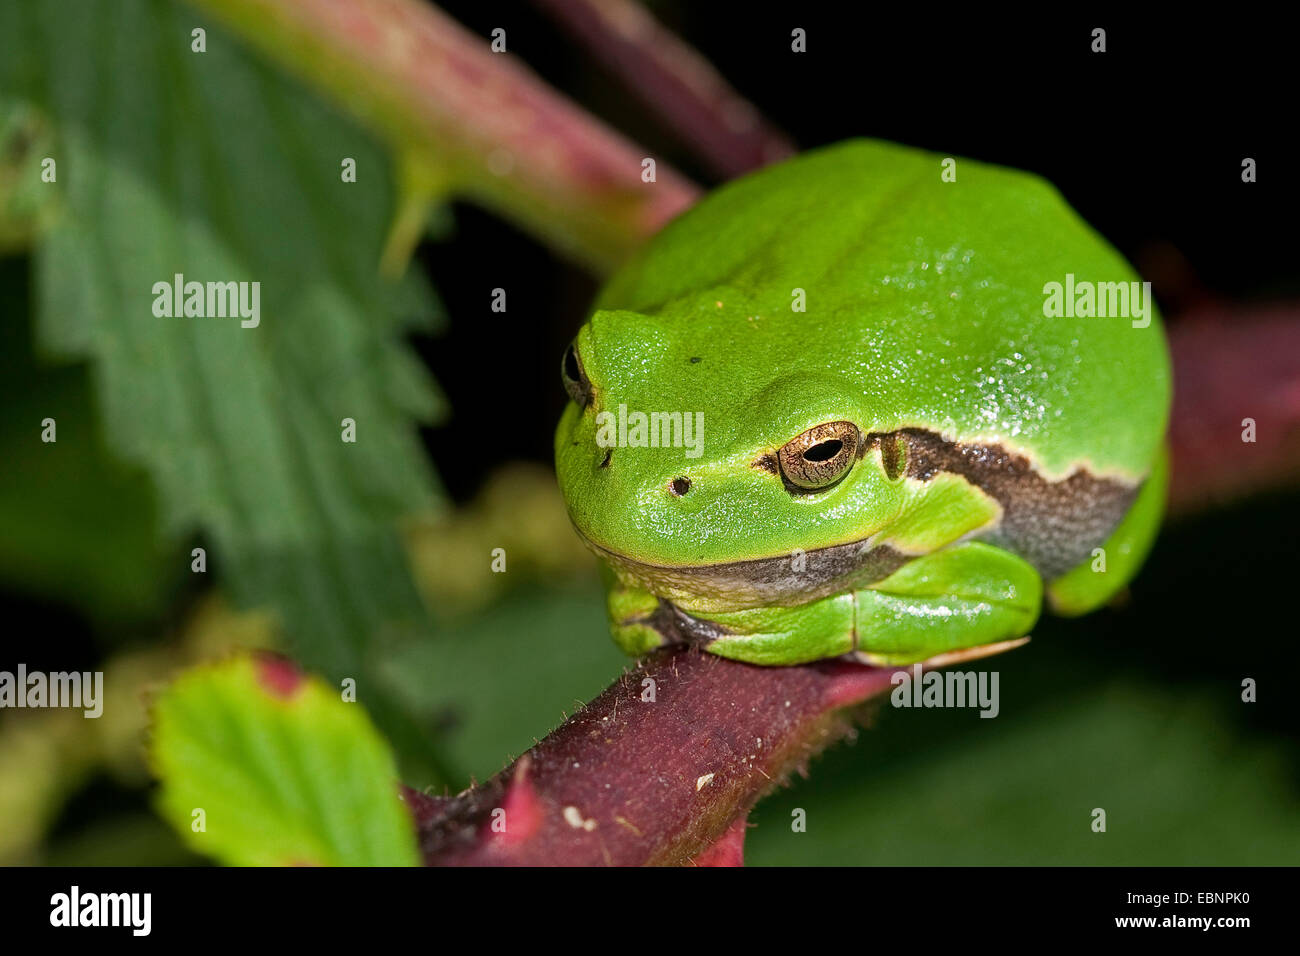 European treefrog, common treefrog, Central European treefrog (Hyla arborea), sunning on a bramble twig, Germany Stock Photo